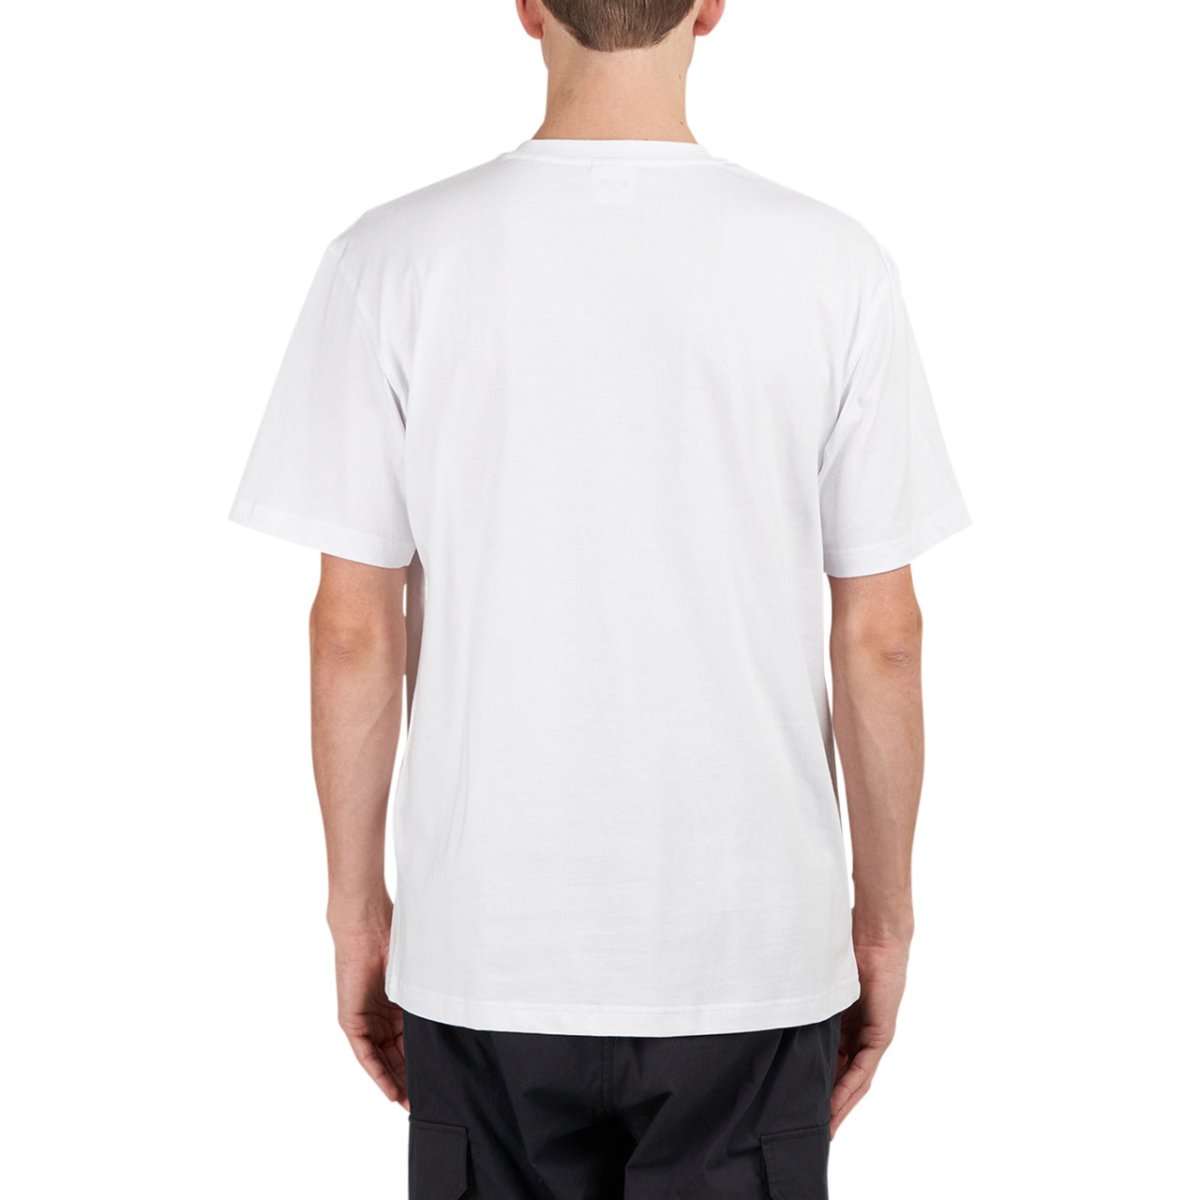 Sex Skateboards Flowers T-Shirt (Weiß)  - Allike Store